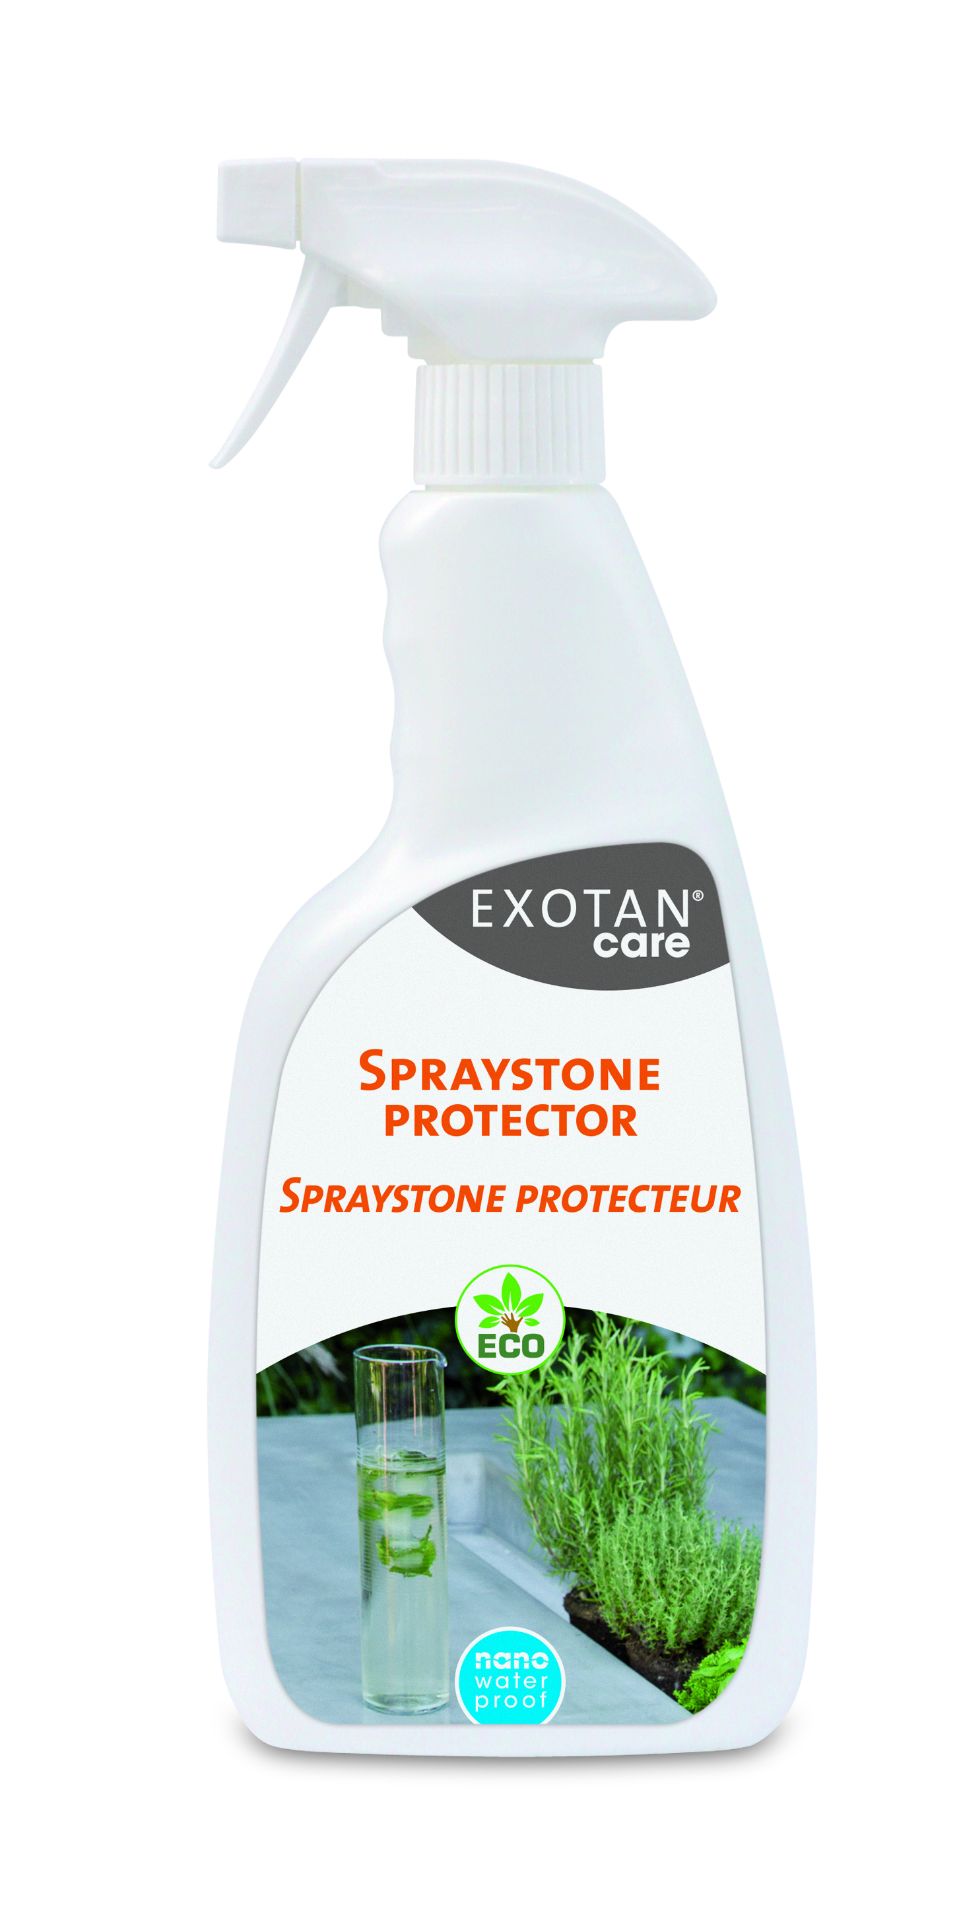 Exotan Care spraystone protector